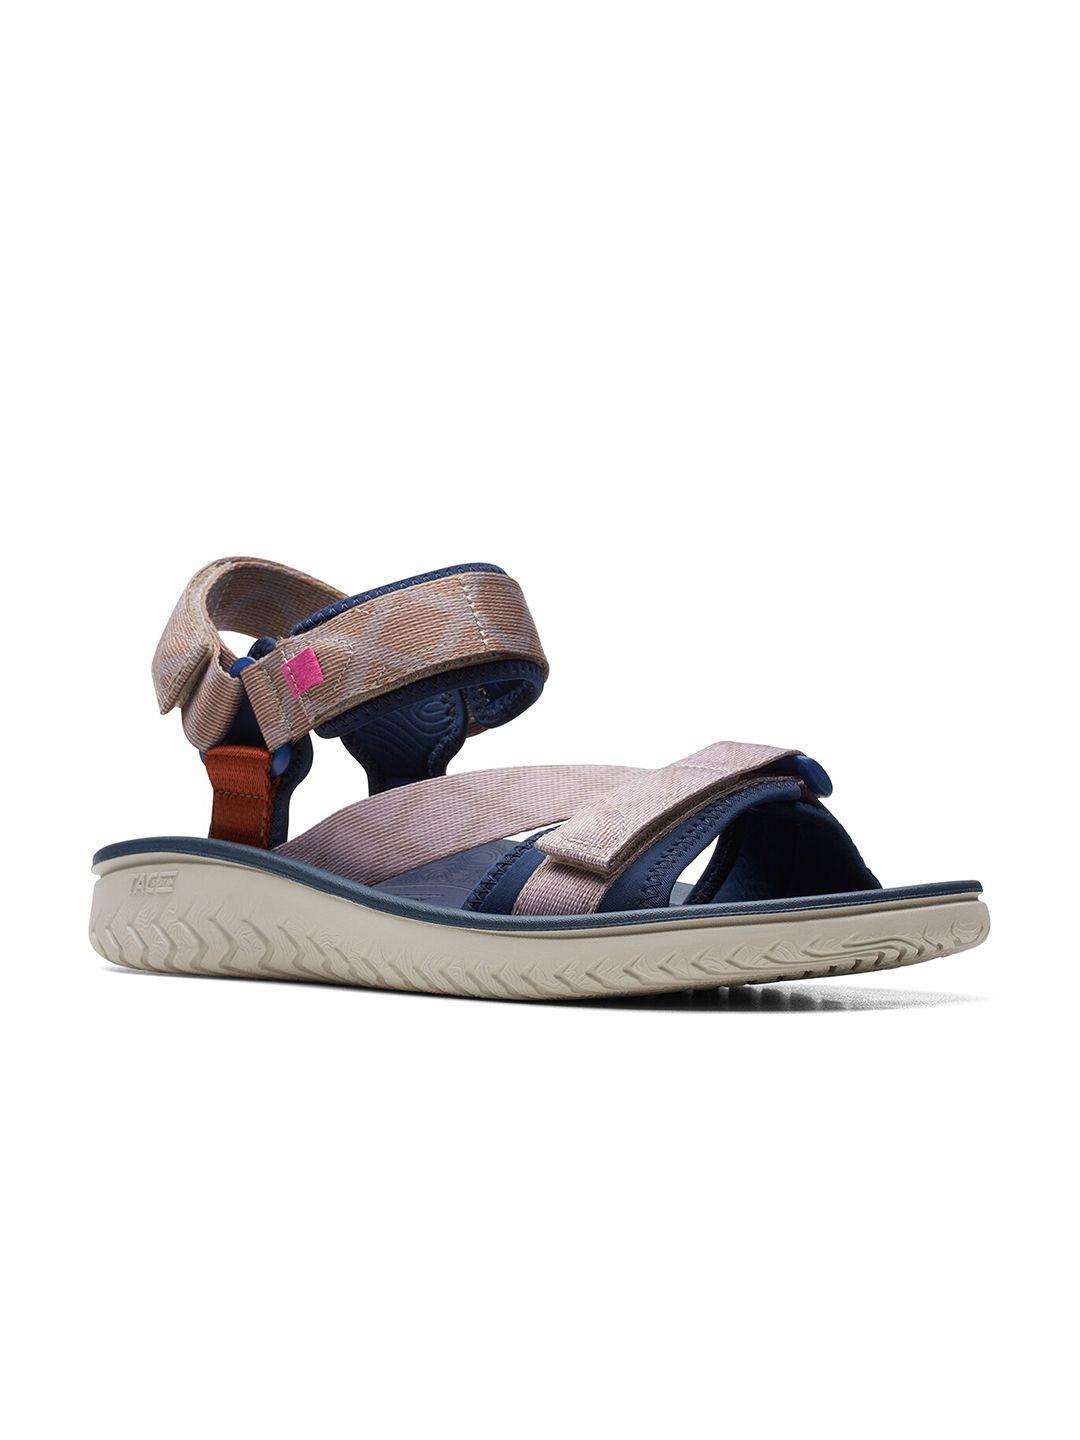 clarks-men-open-toe-sports-sandals